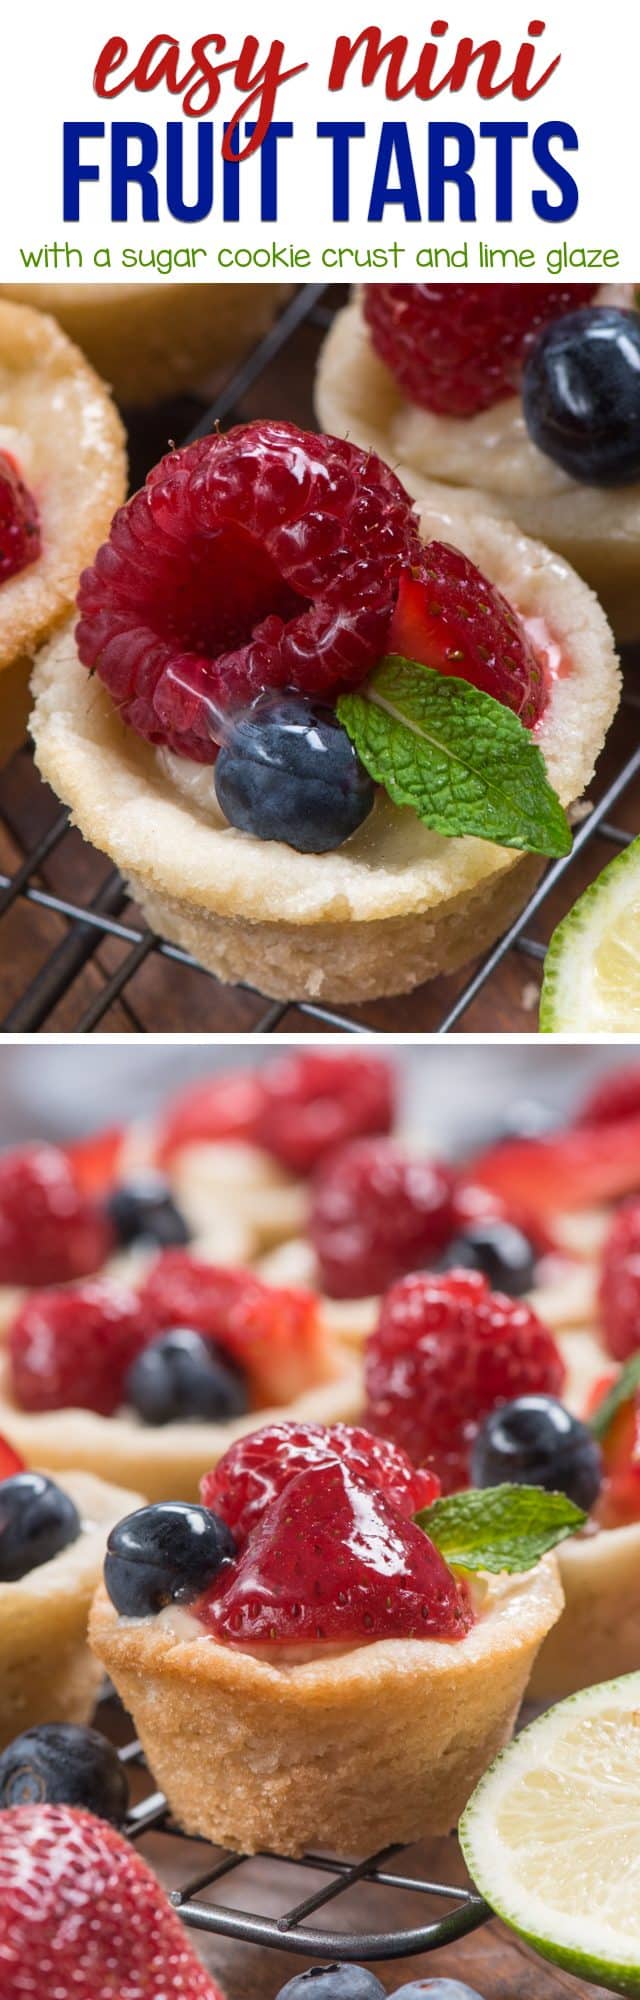 collage of mini fruit tart photos